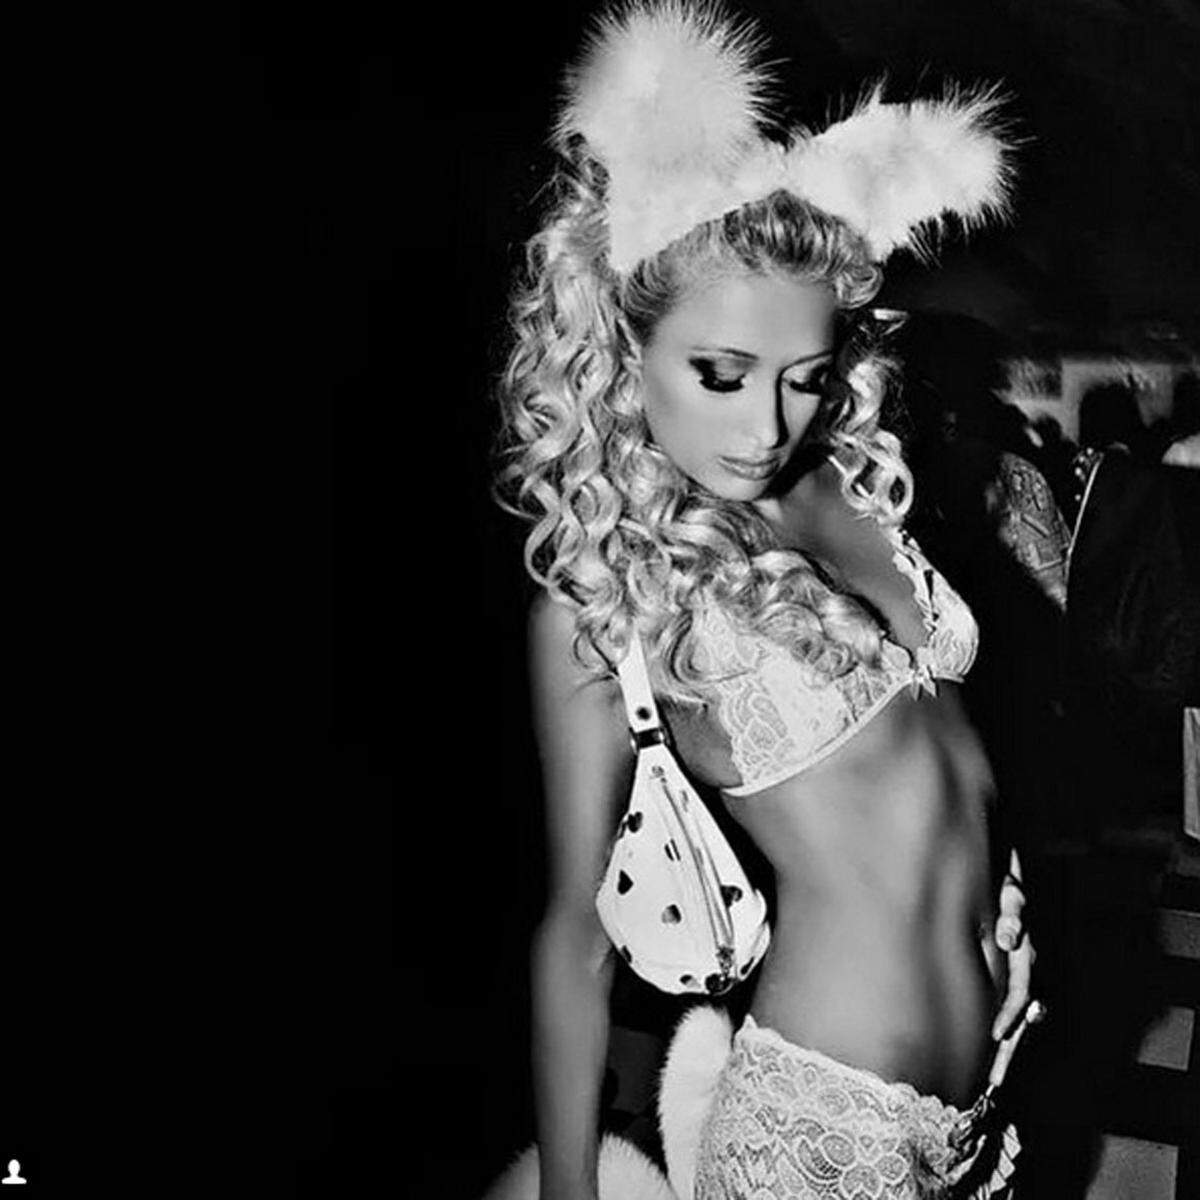 Als "Sexy Bunny" zeigte sich Paris Hilton.